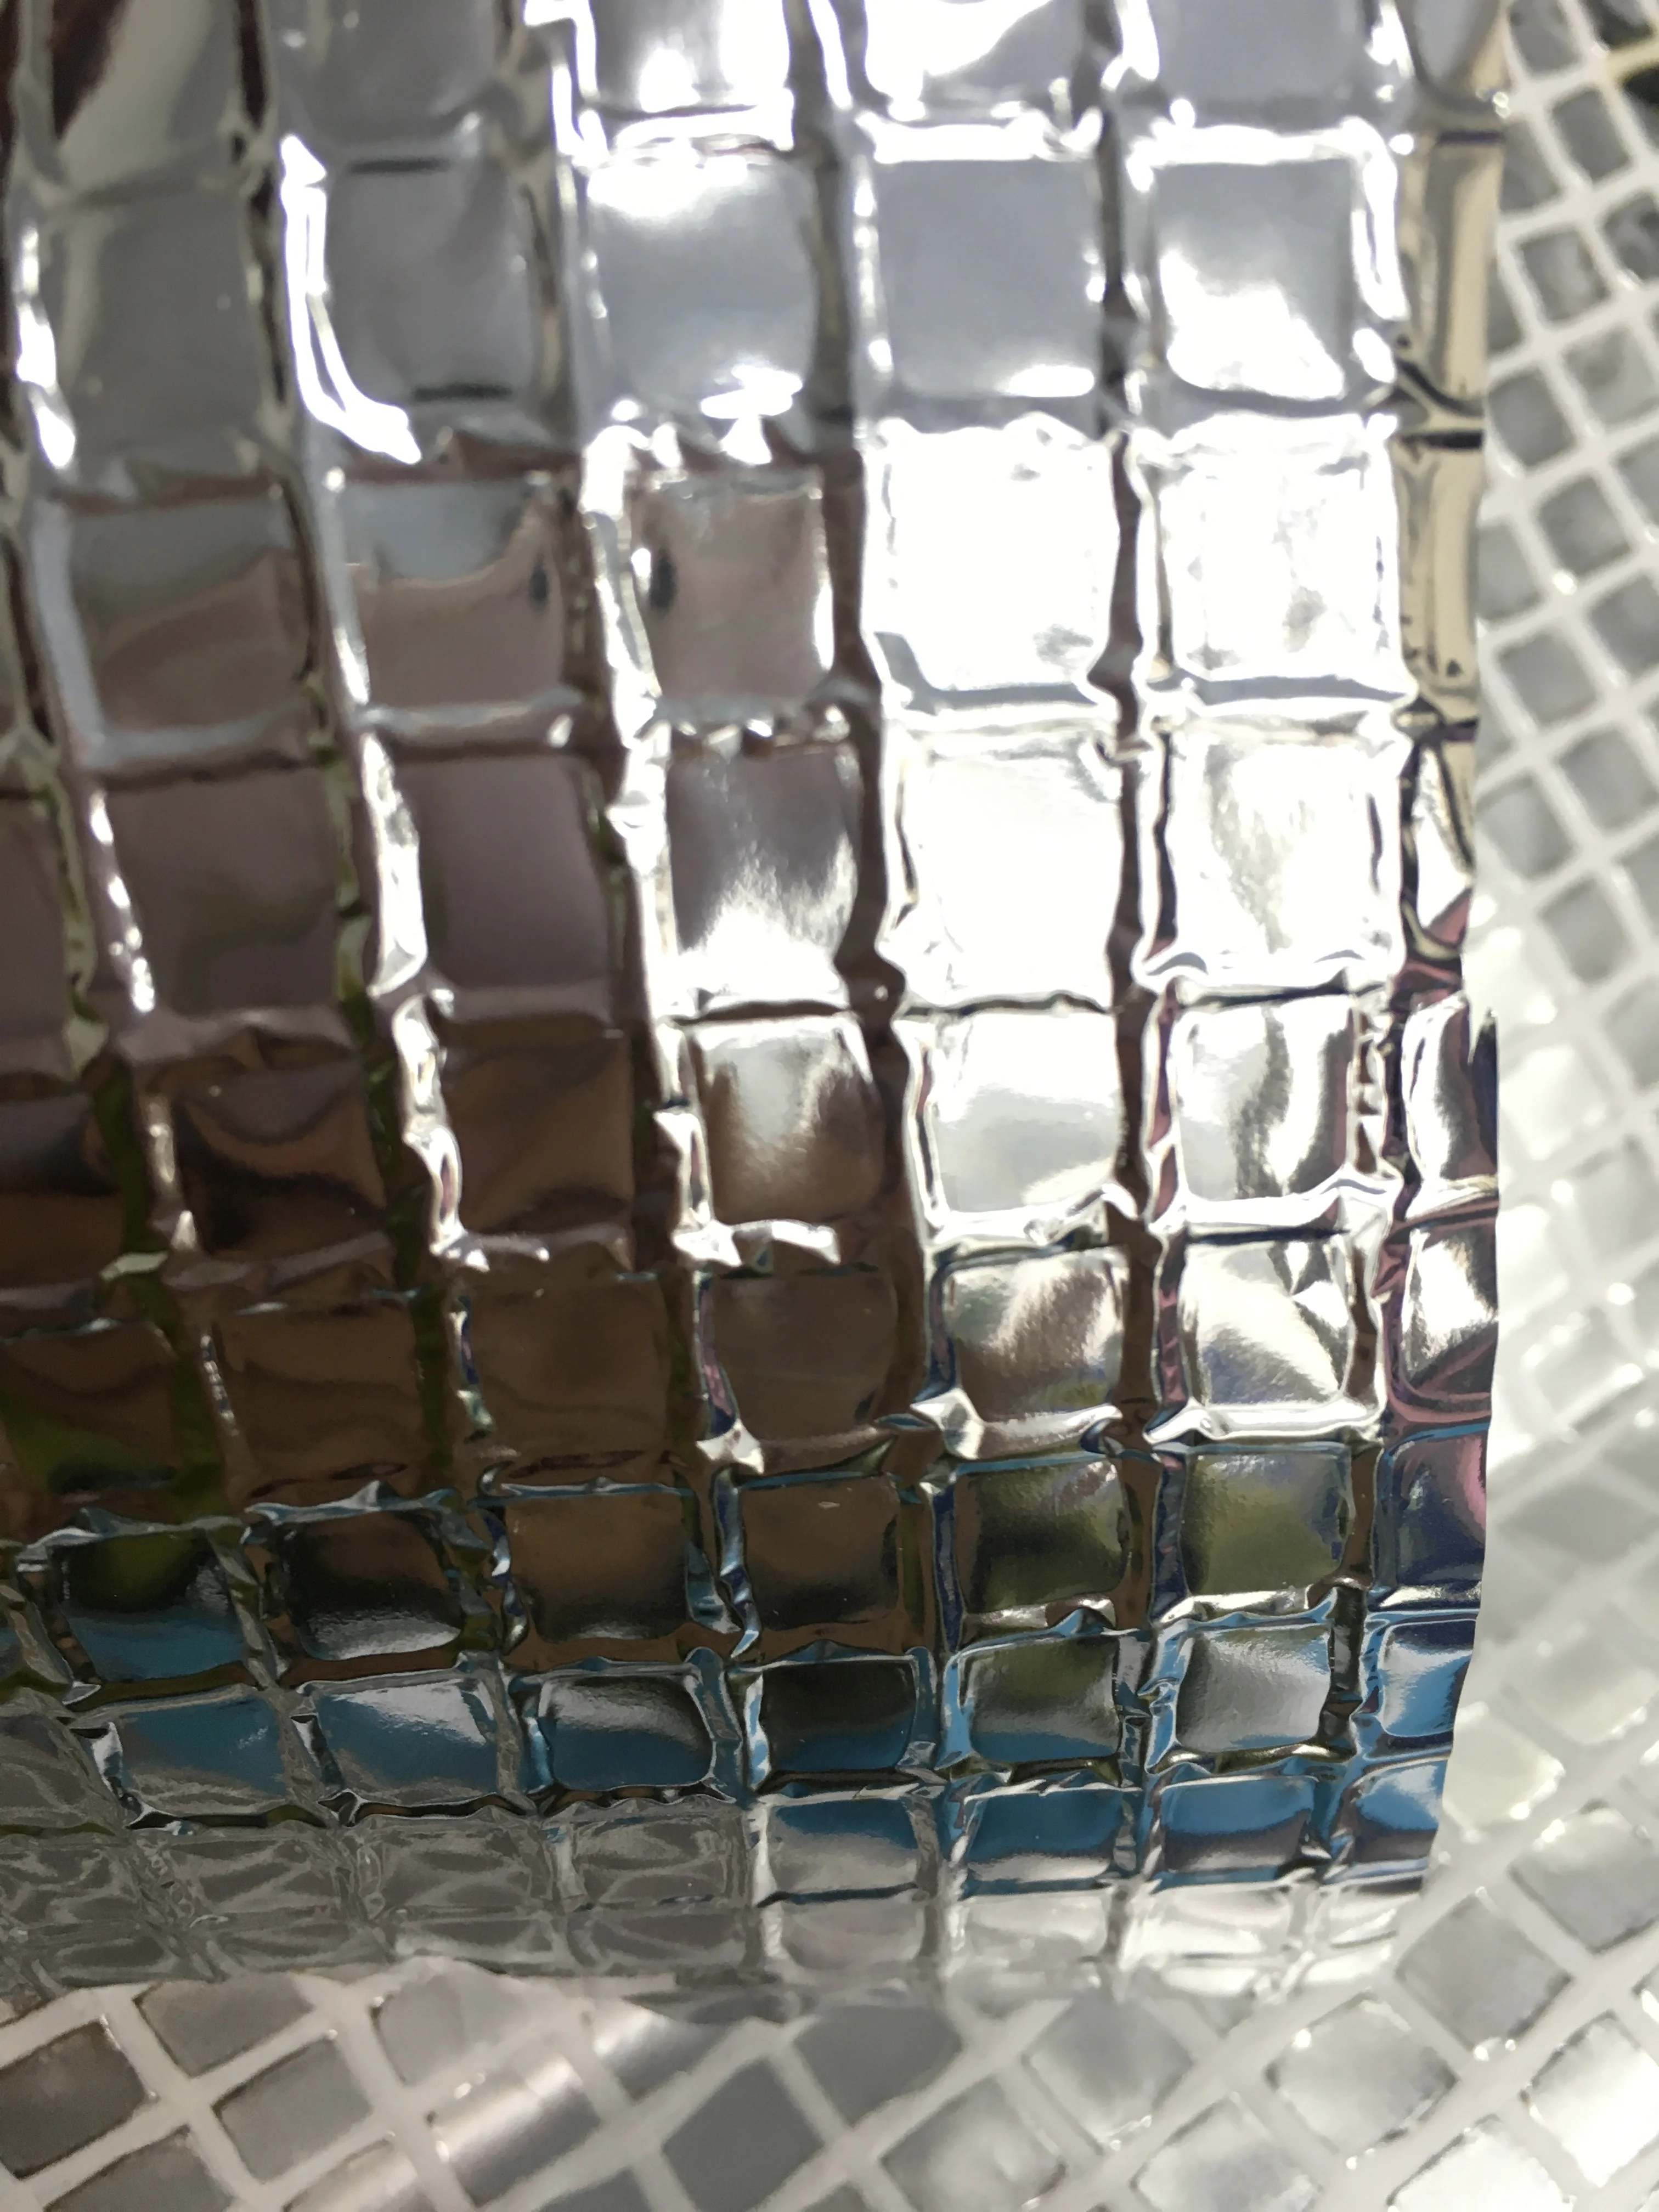 
thermal insulation vapor barrier permeable foil AL140 